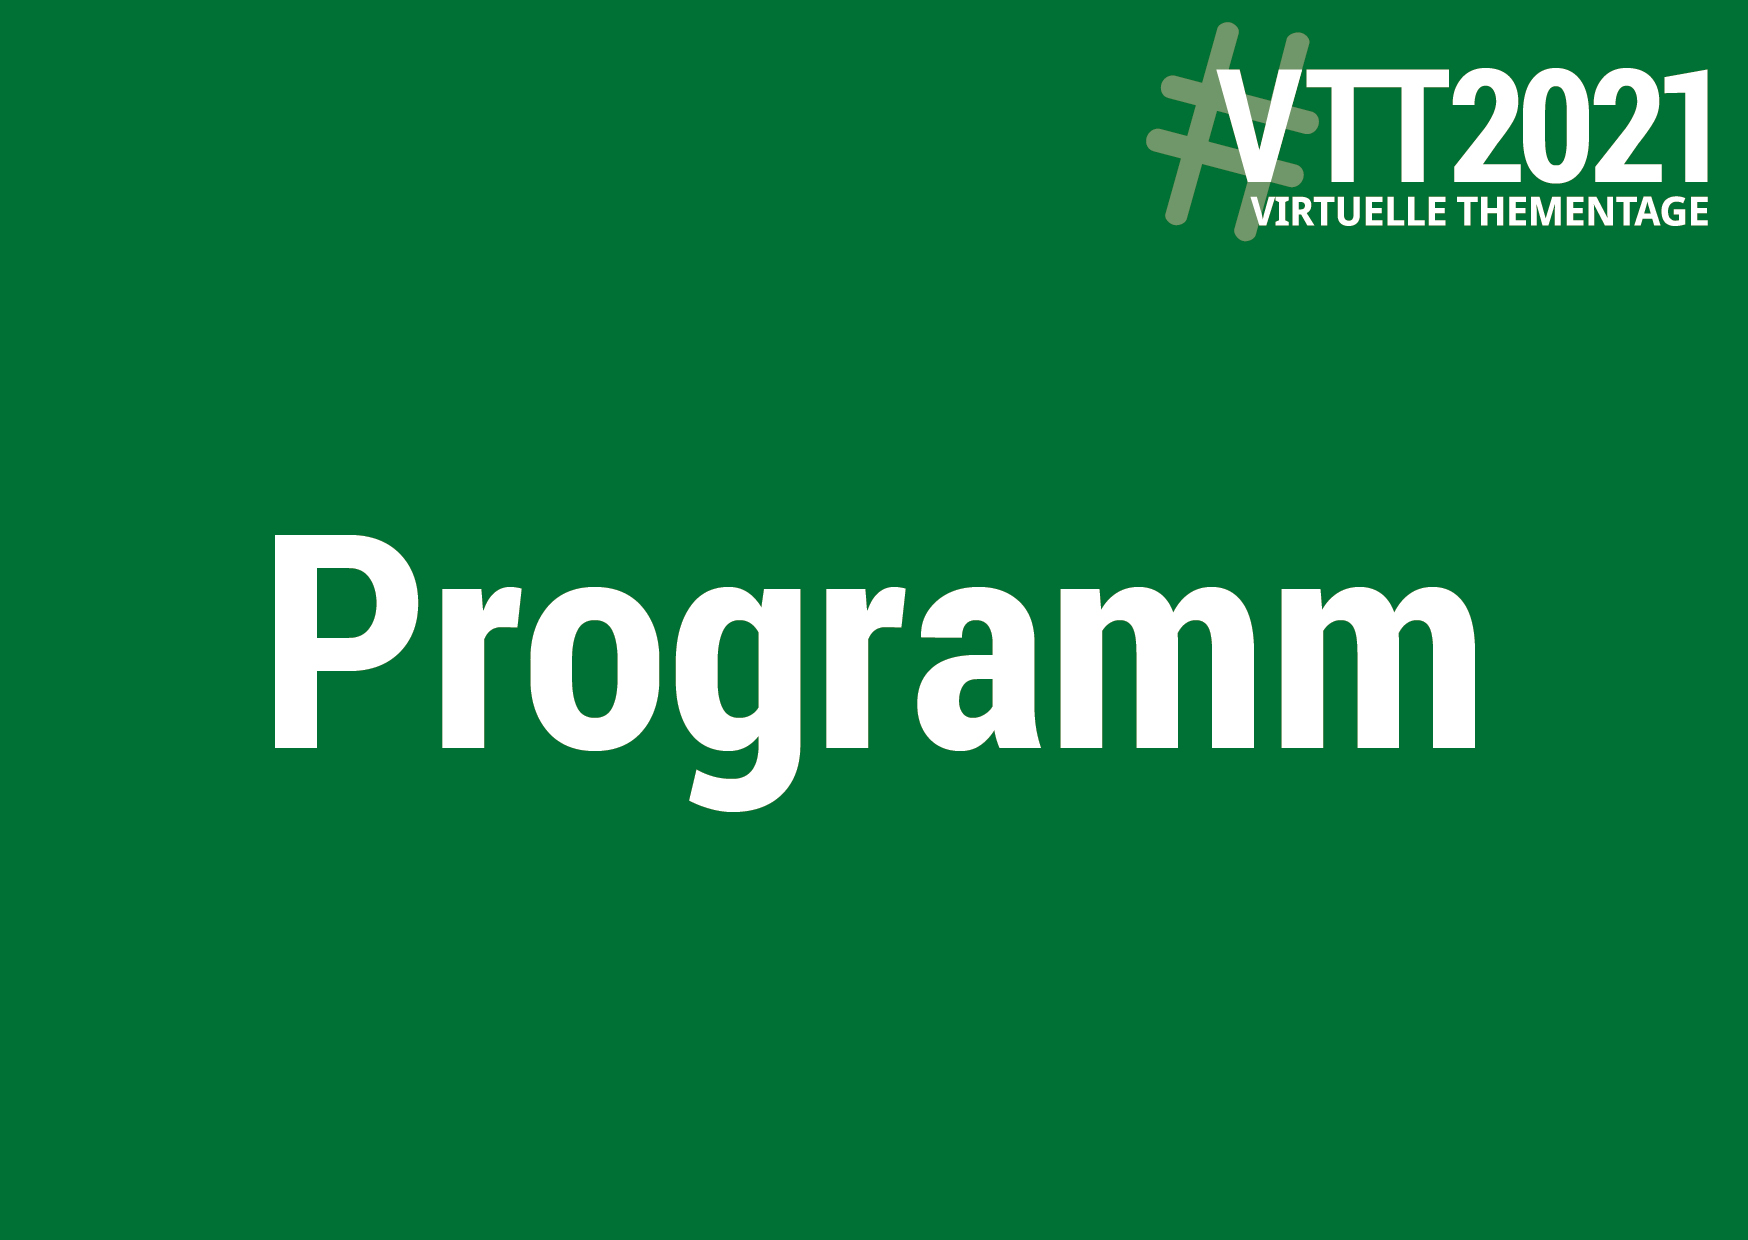 Programm Event VTT 2021